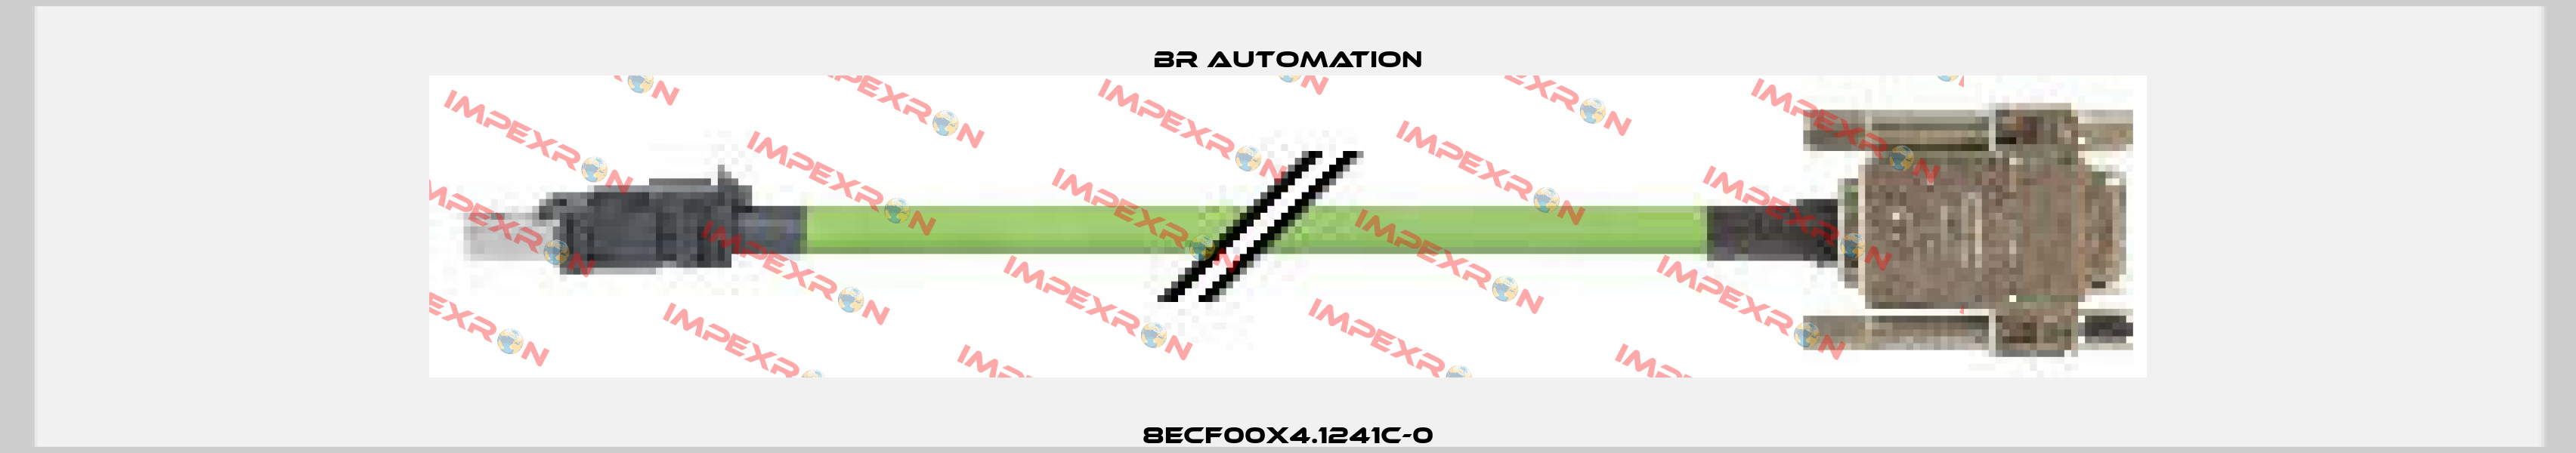 8ECF00X4.1241C-0 Br Automation